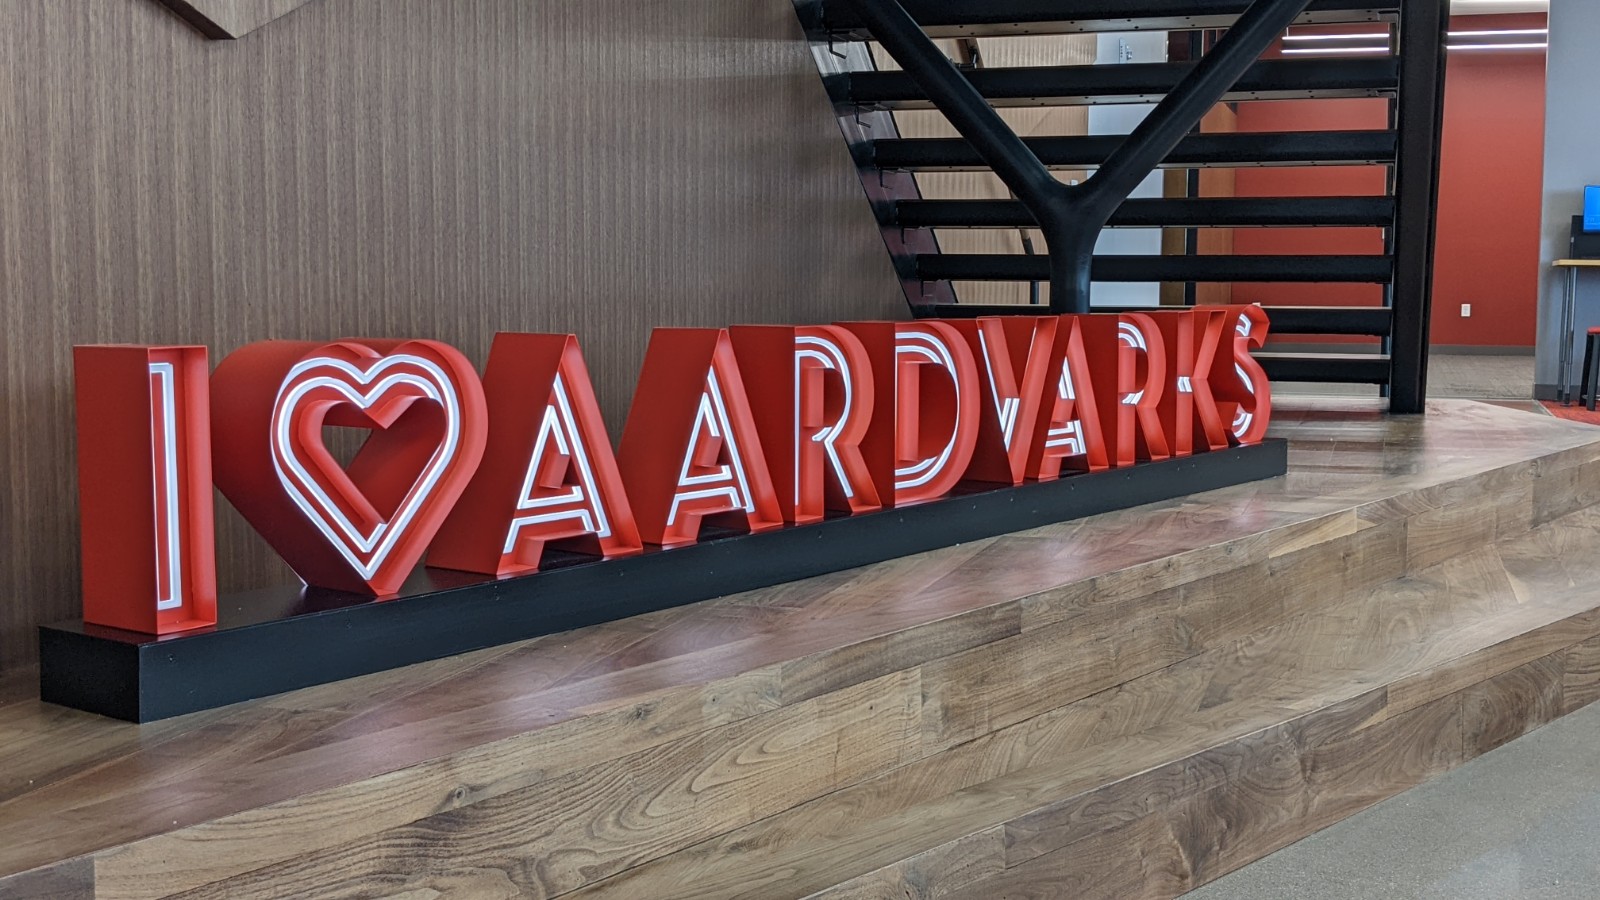 AIMS I love Aadvarks Sign